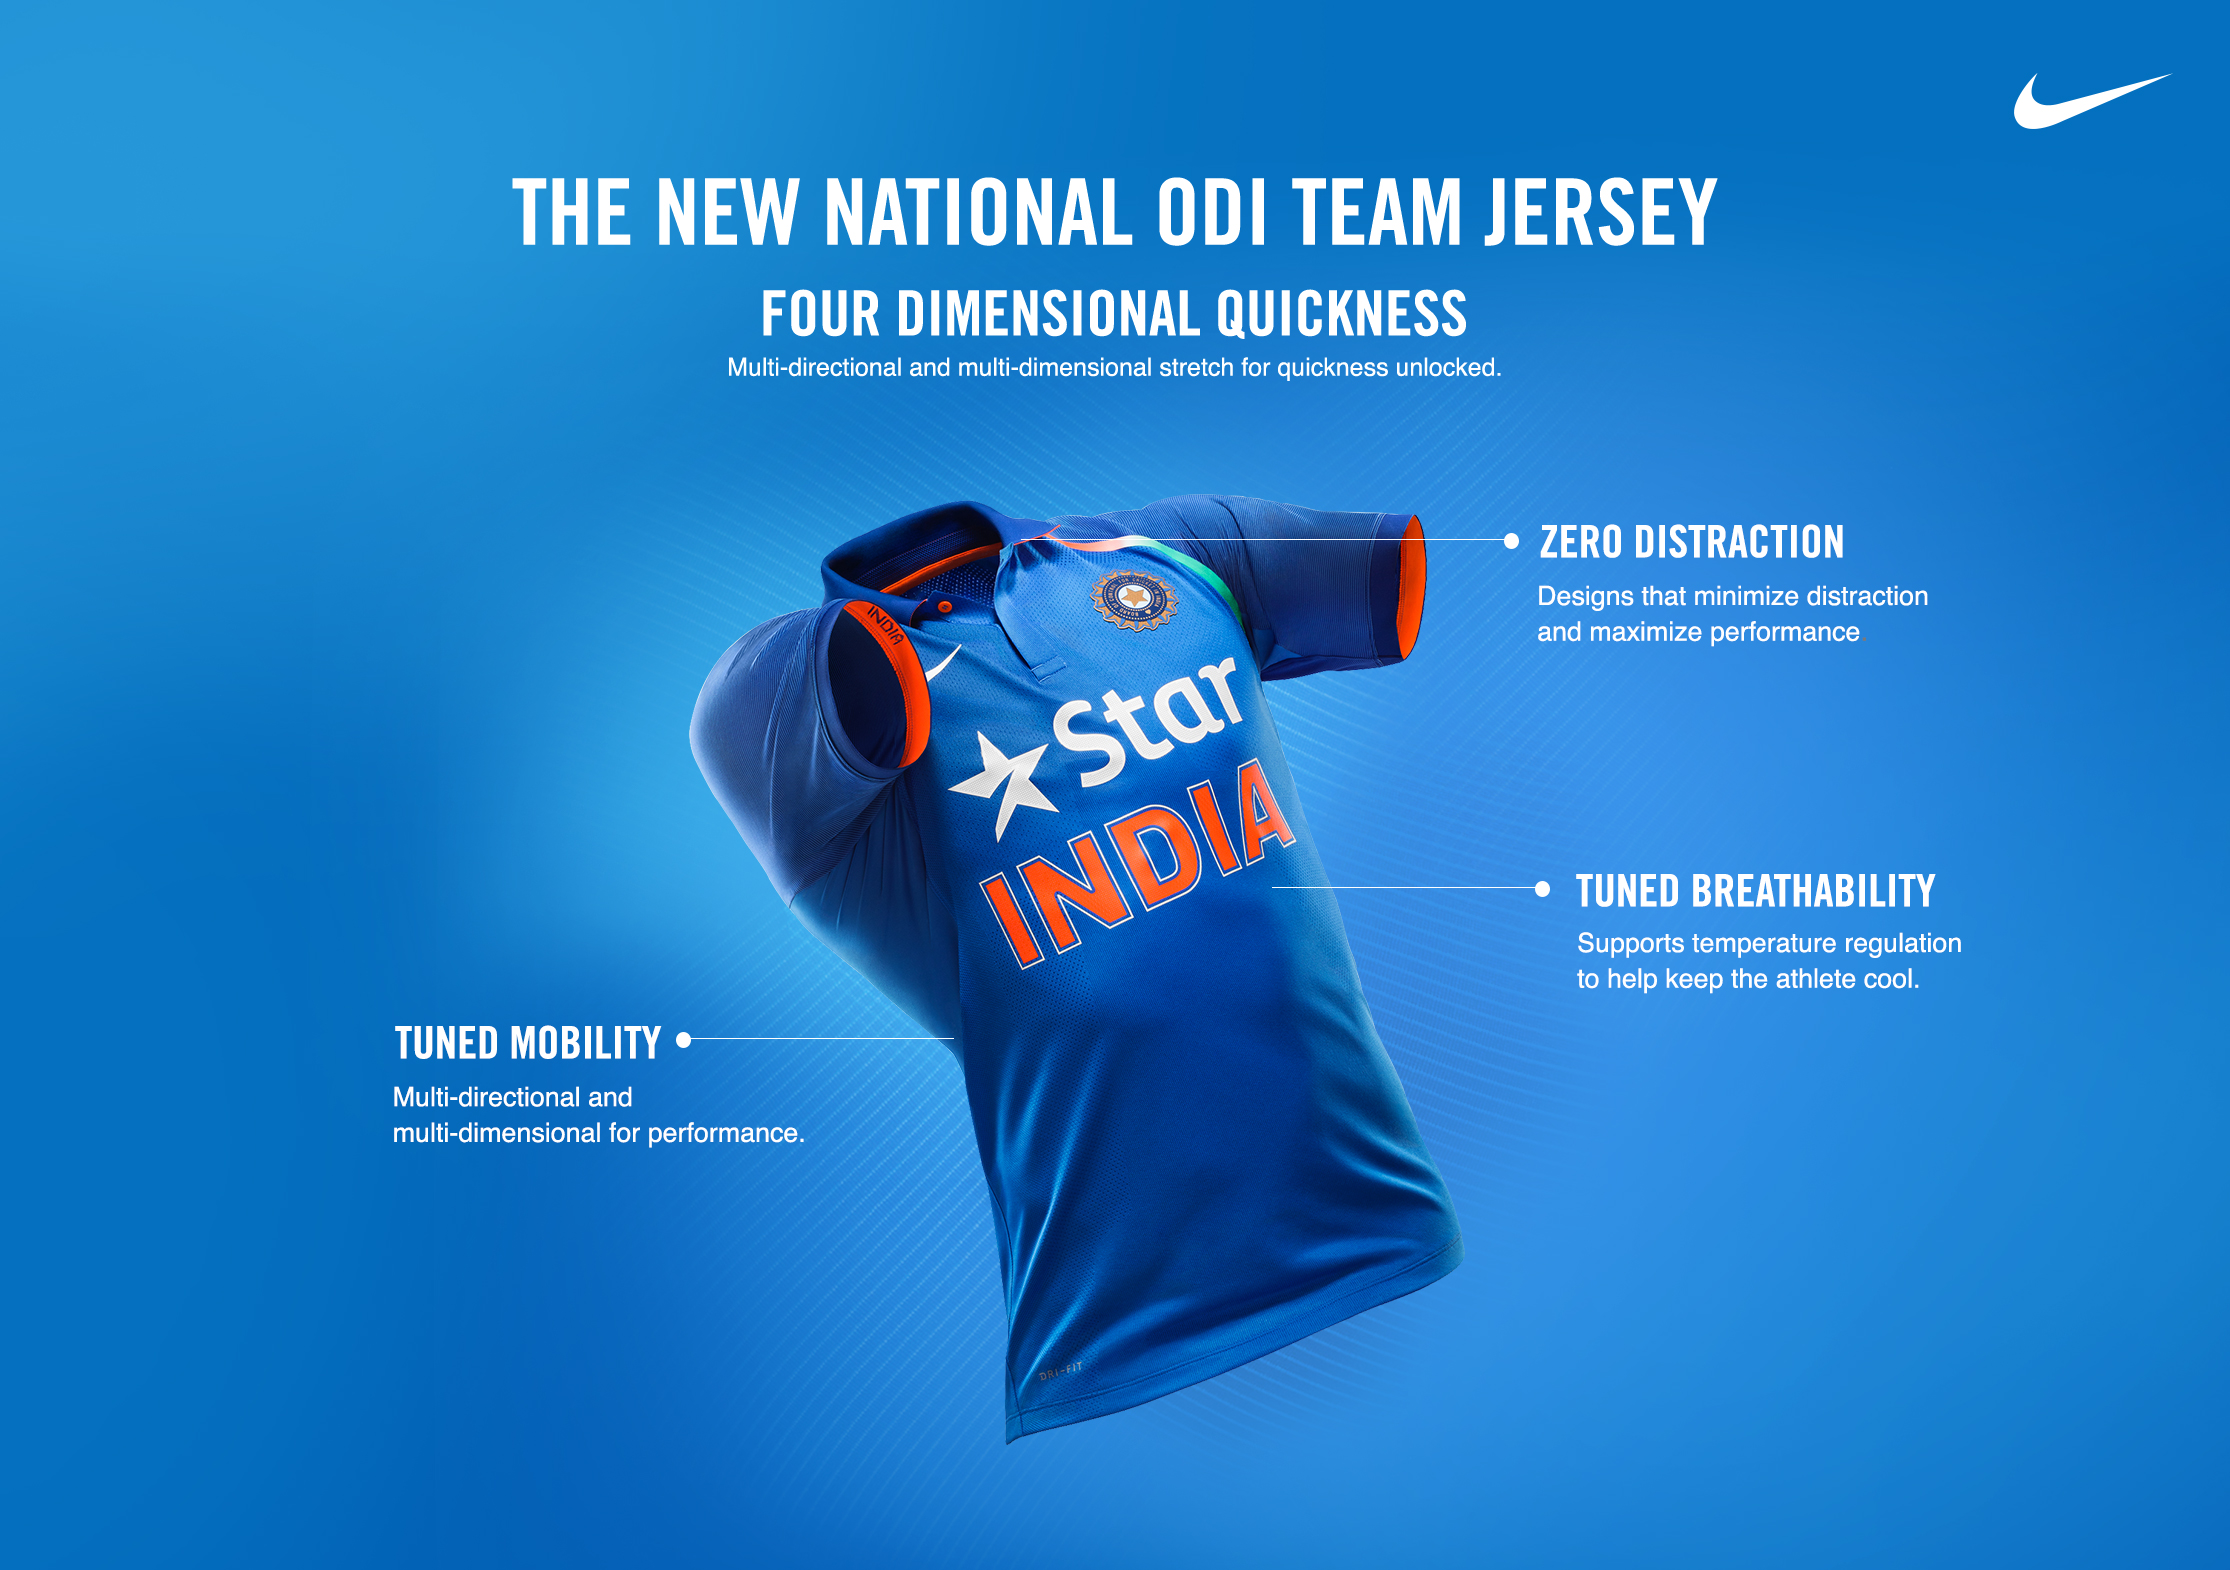 indian team new jersey online buy